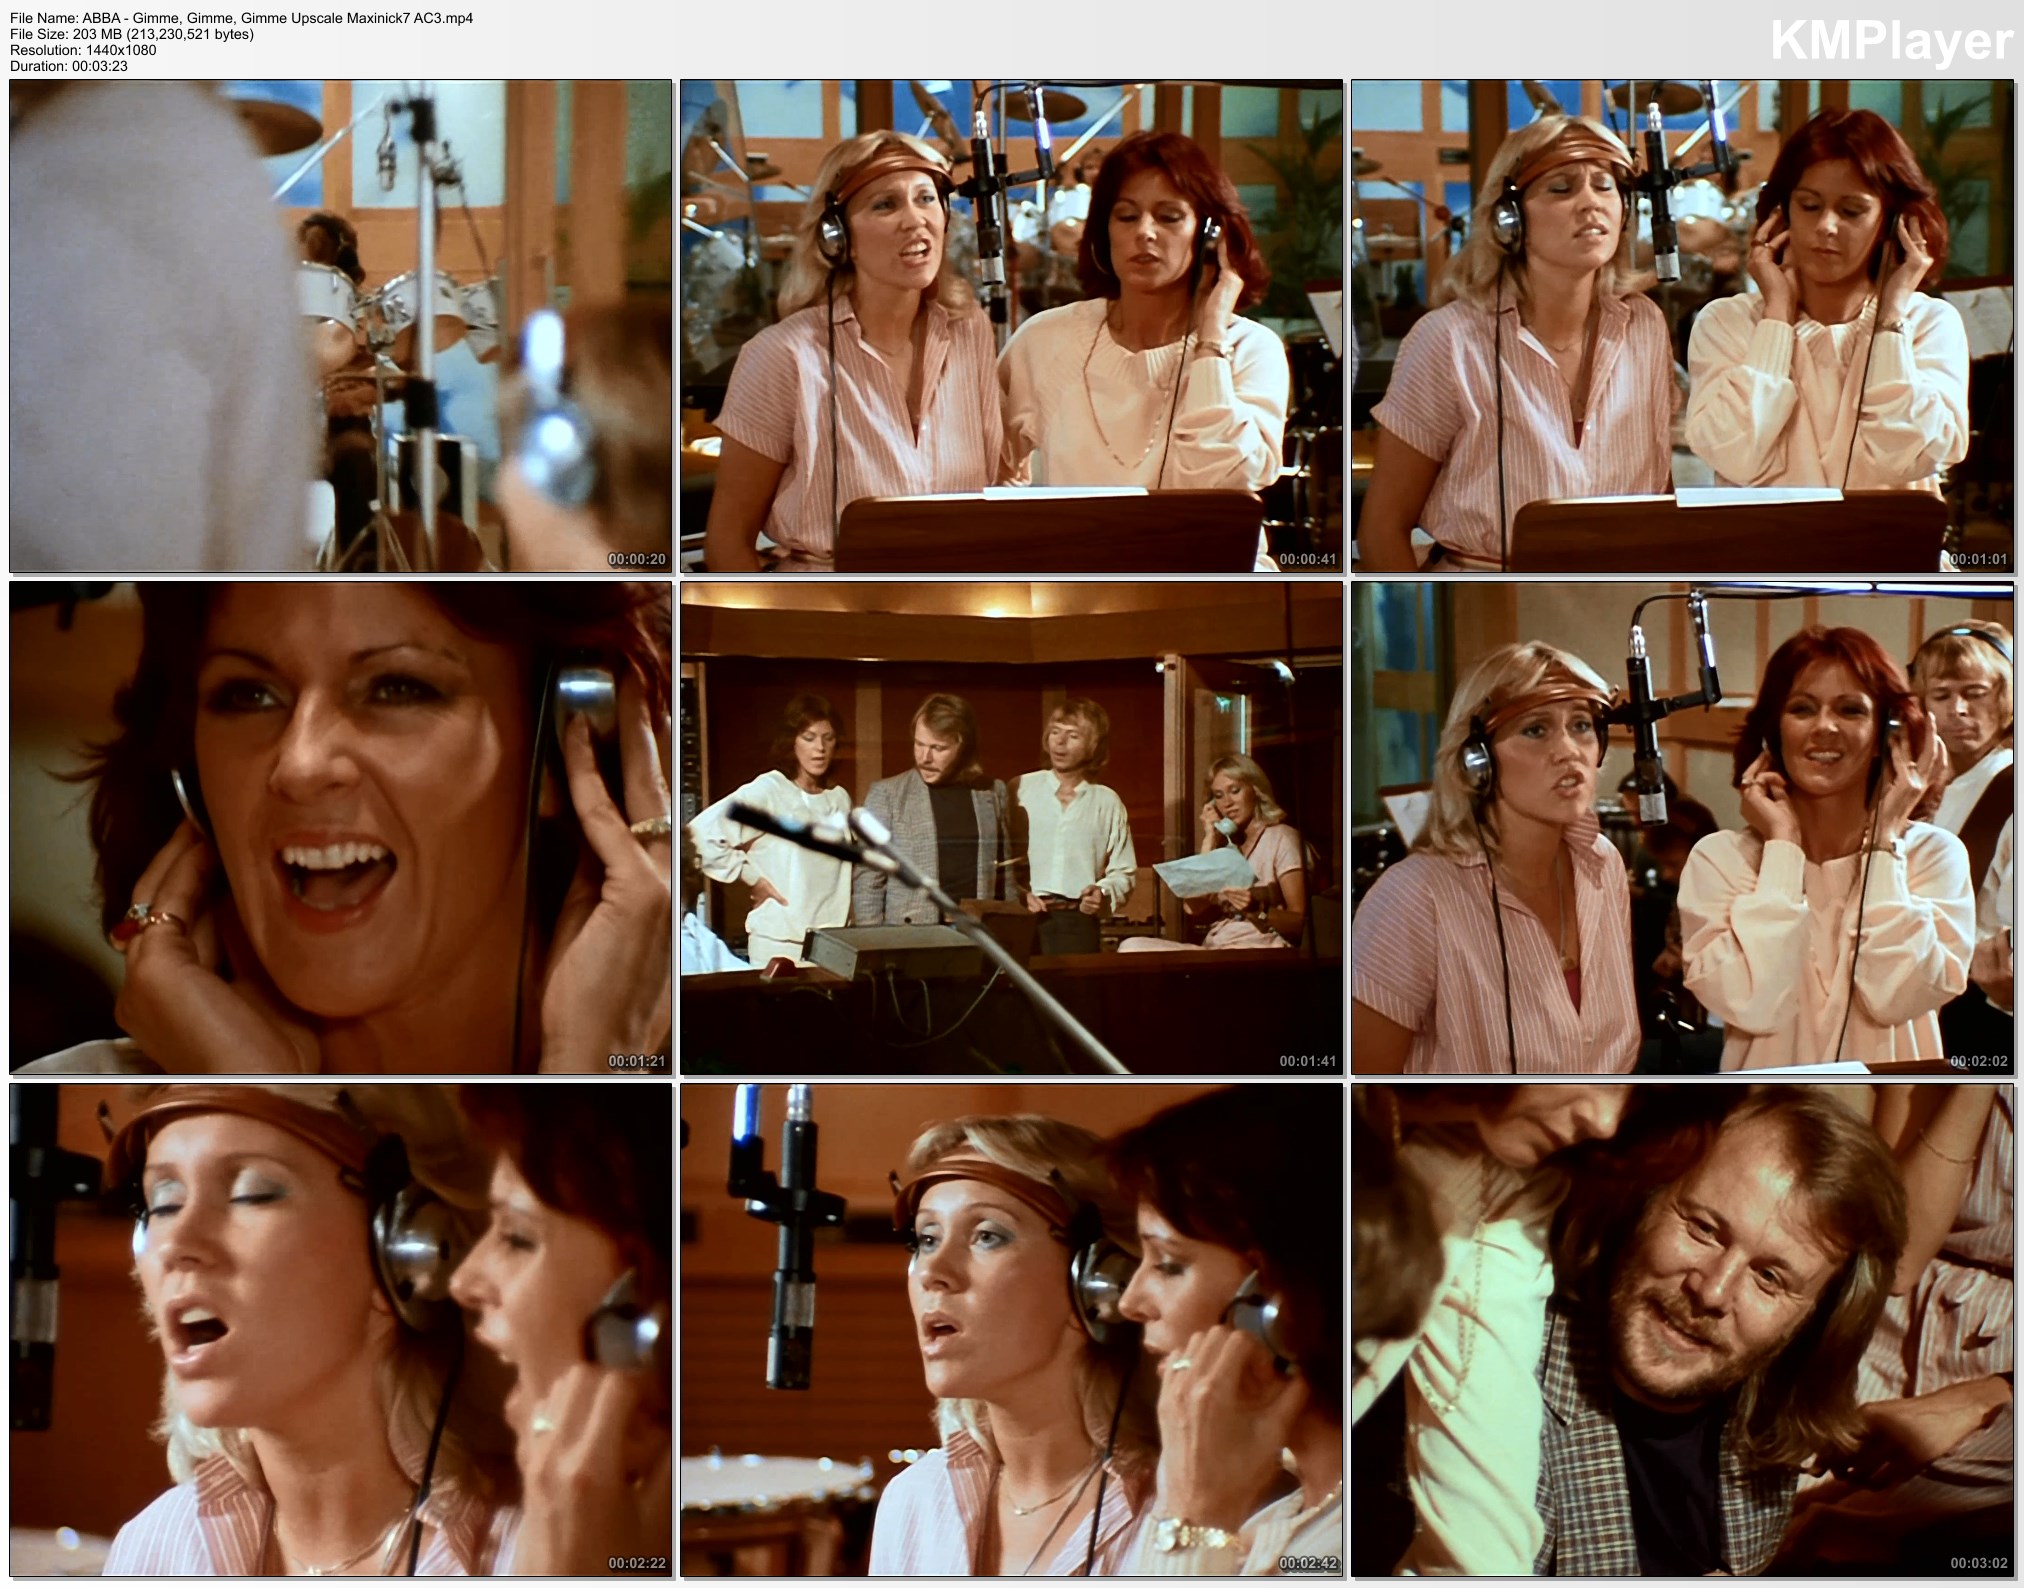 دانلود موزیک ویدیو Gimme Gimme Gimme از ABBA (نسخه اورجینال)